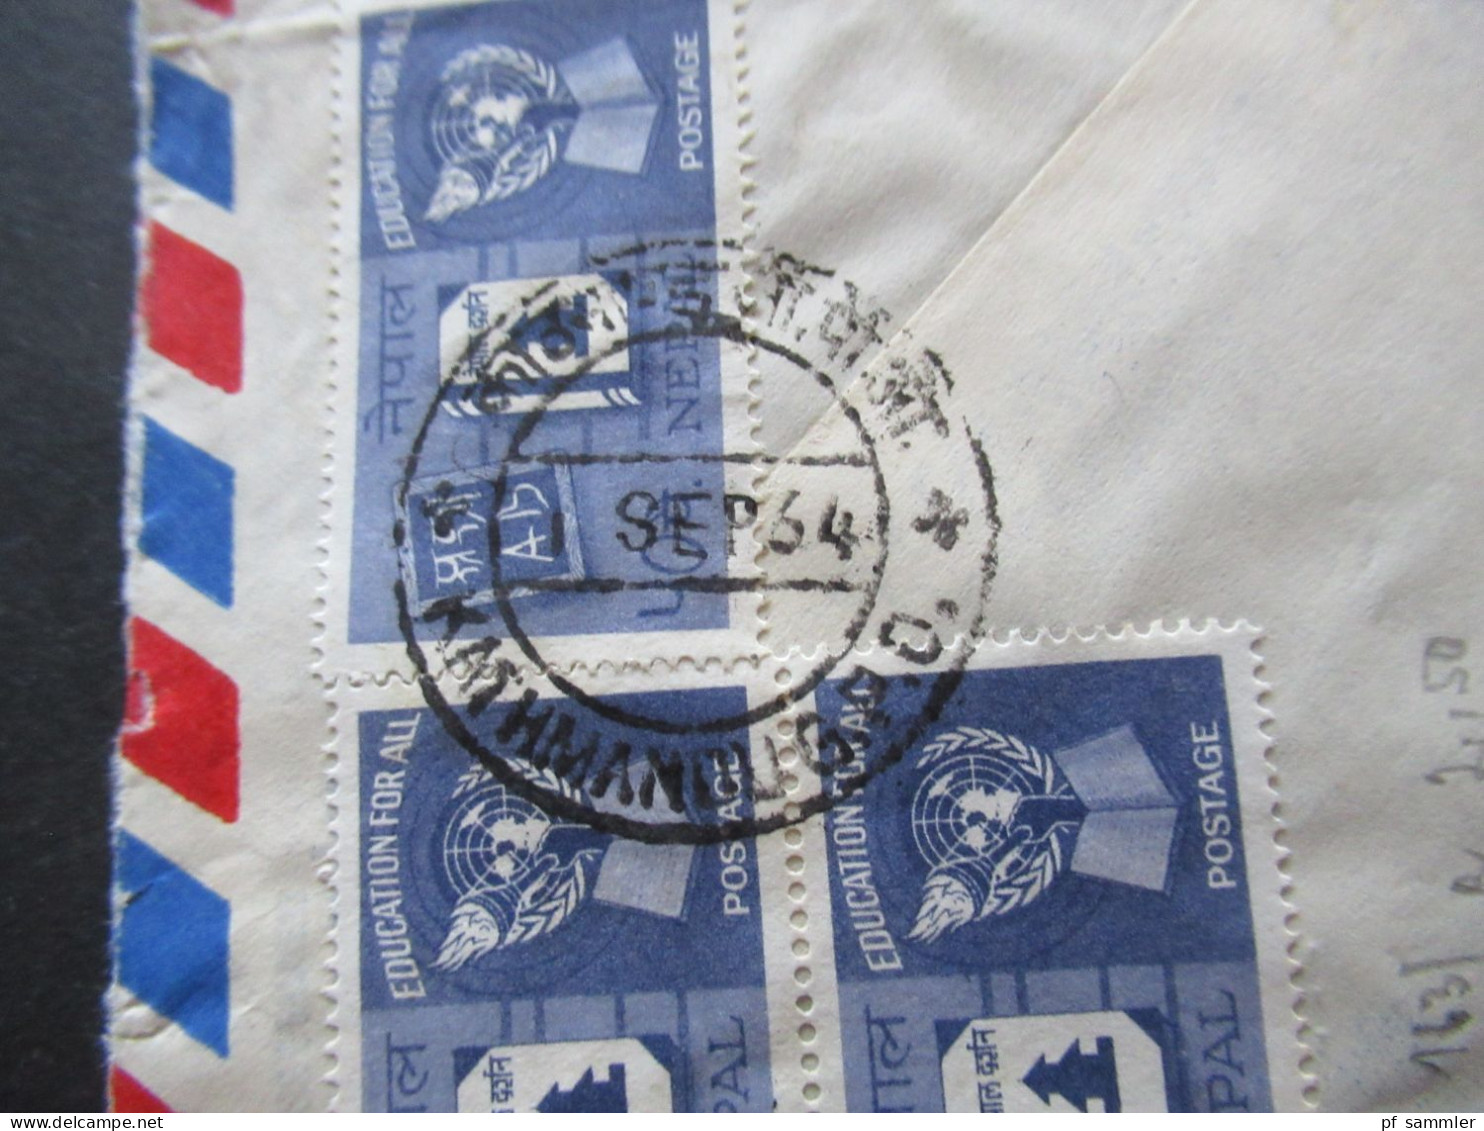 Asien Nepal Air Mail Luftpost Kathmandu GPO 1964 Education For All (3) MiF / Under Postal Certificate Auslandsbrief - Népal